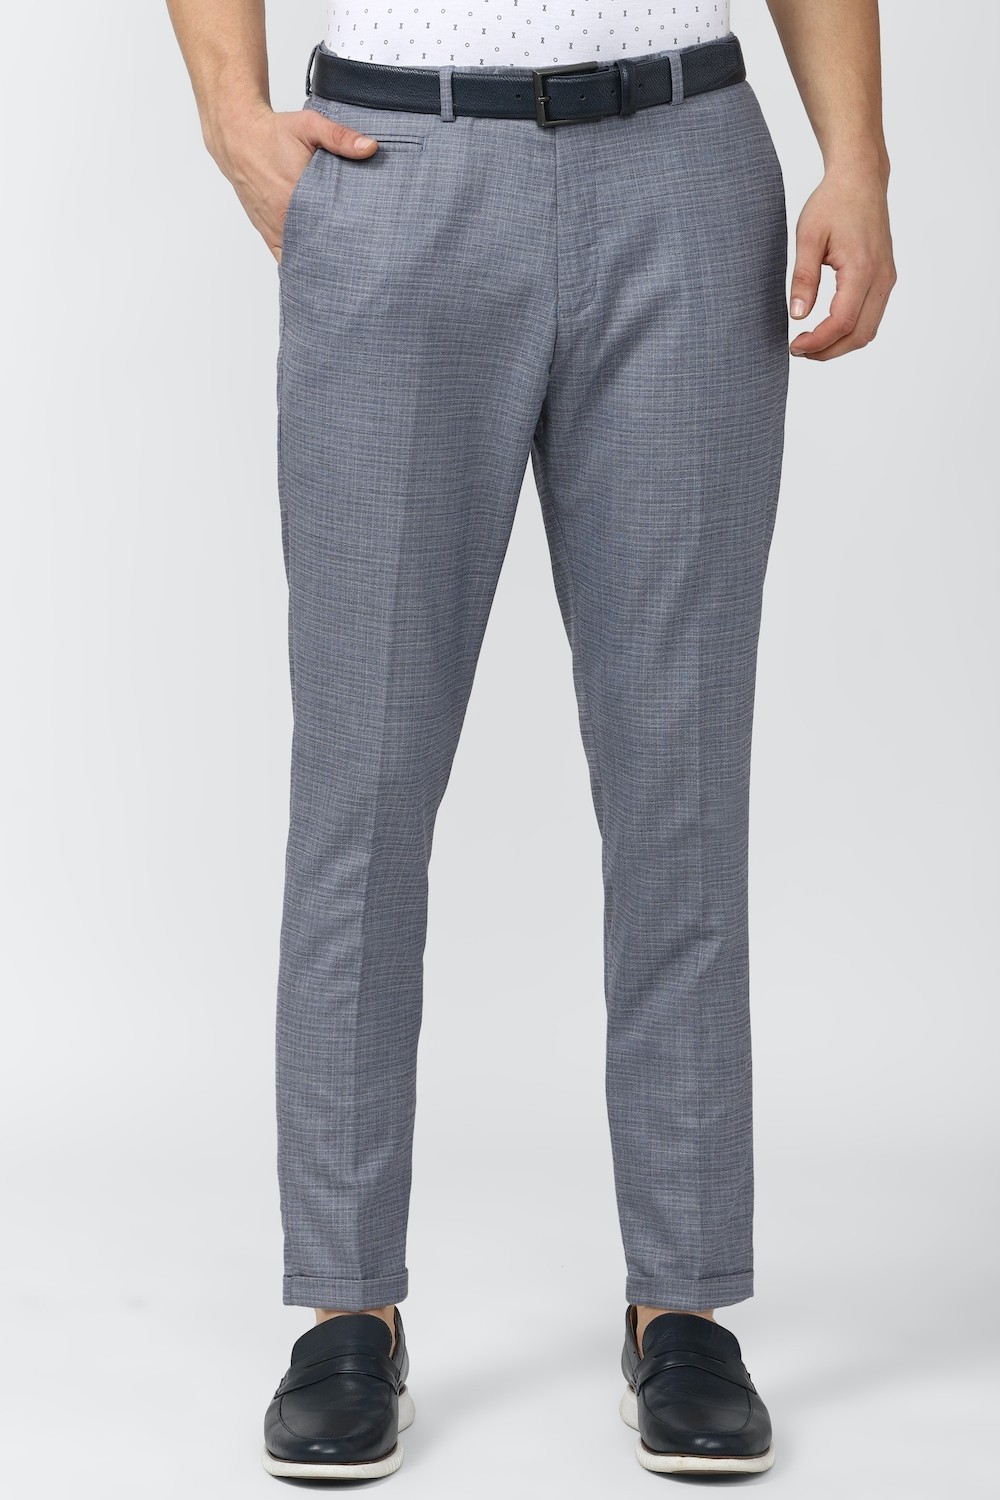 Buy Men Navy Solid Slim Fit Formal Trousers Online  301811  Peter England